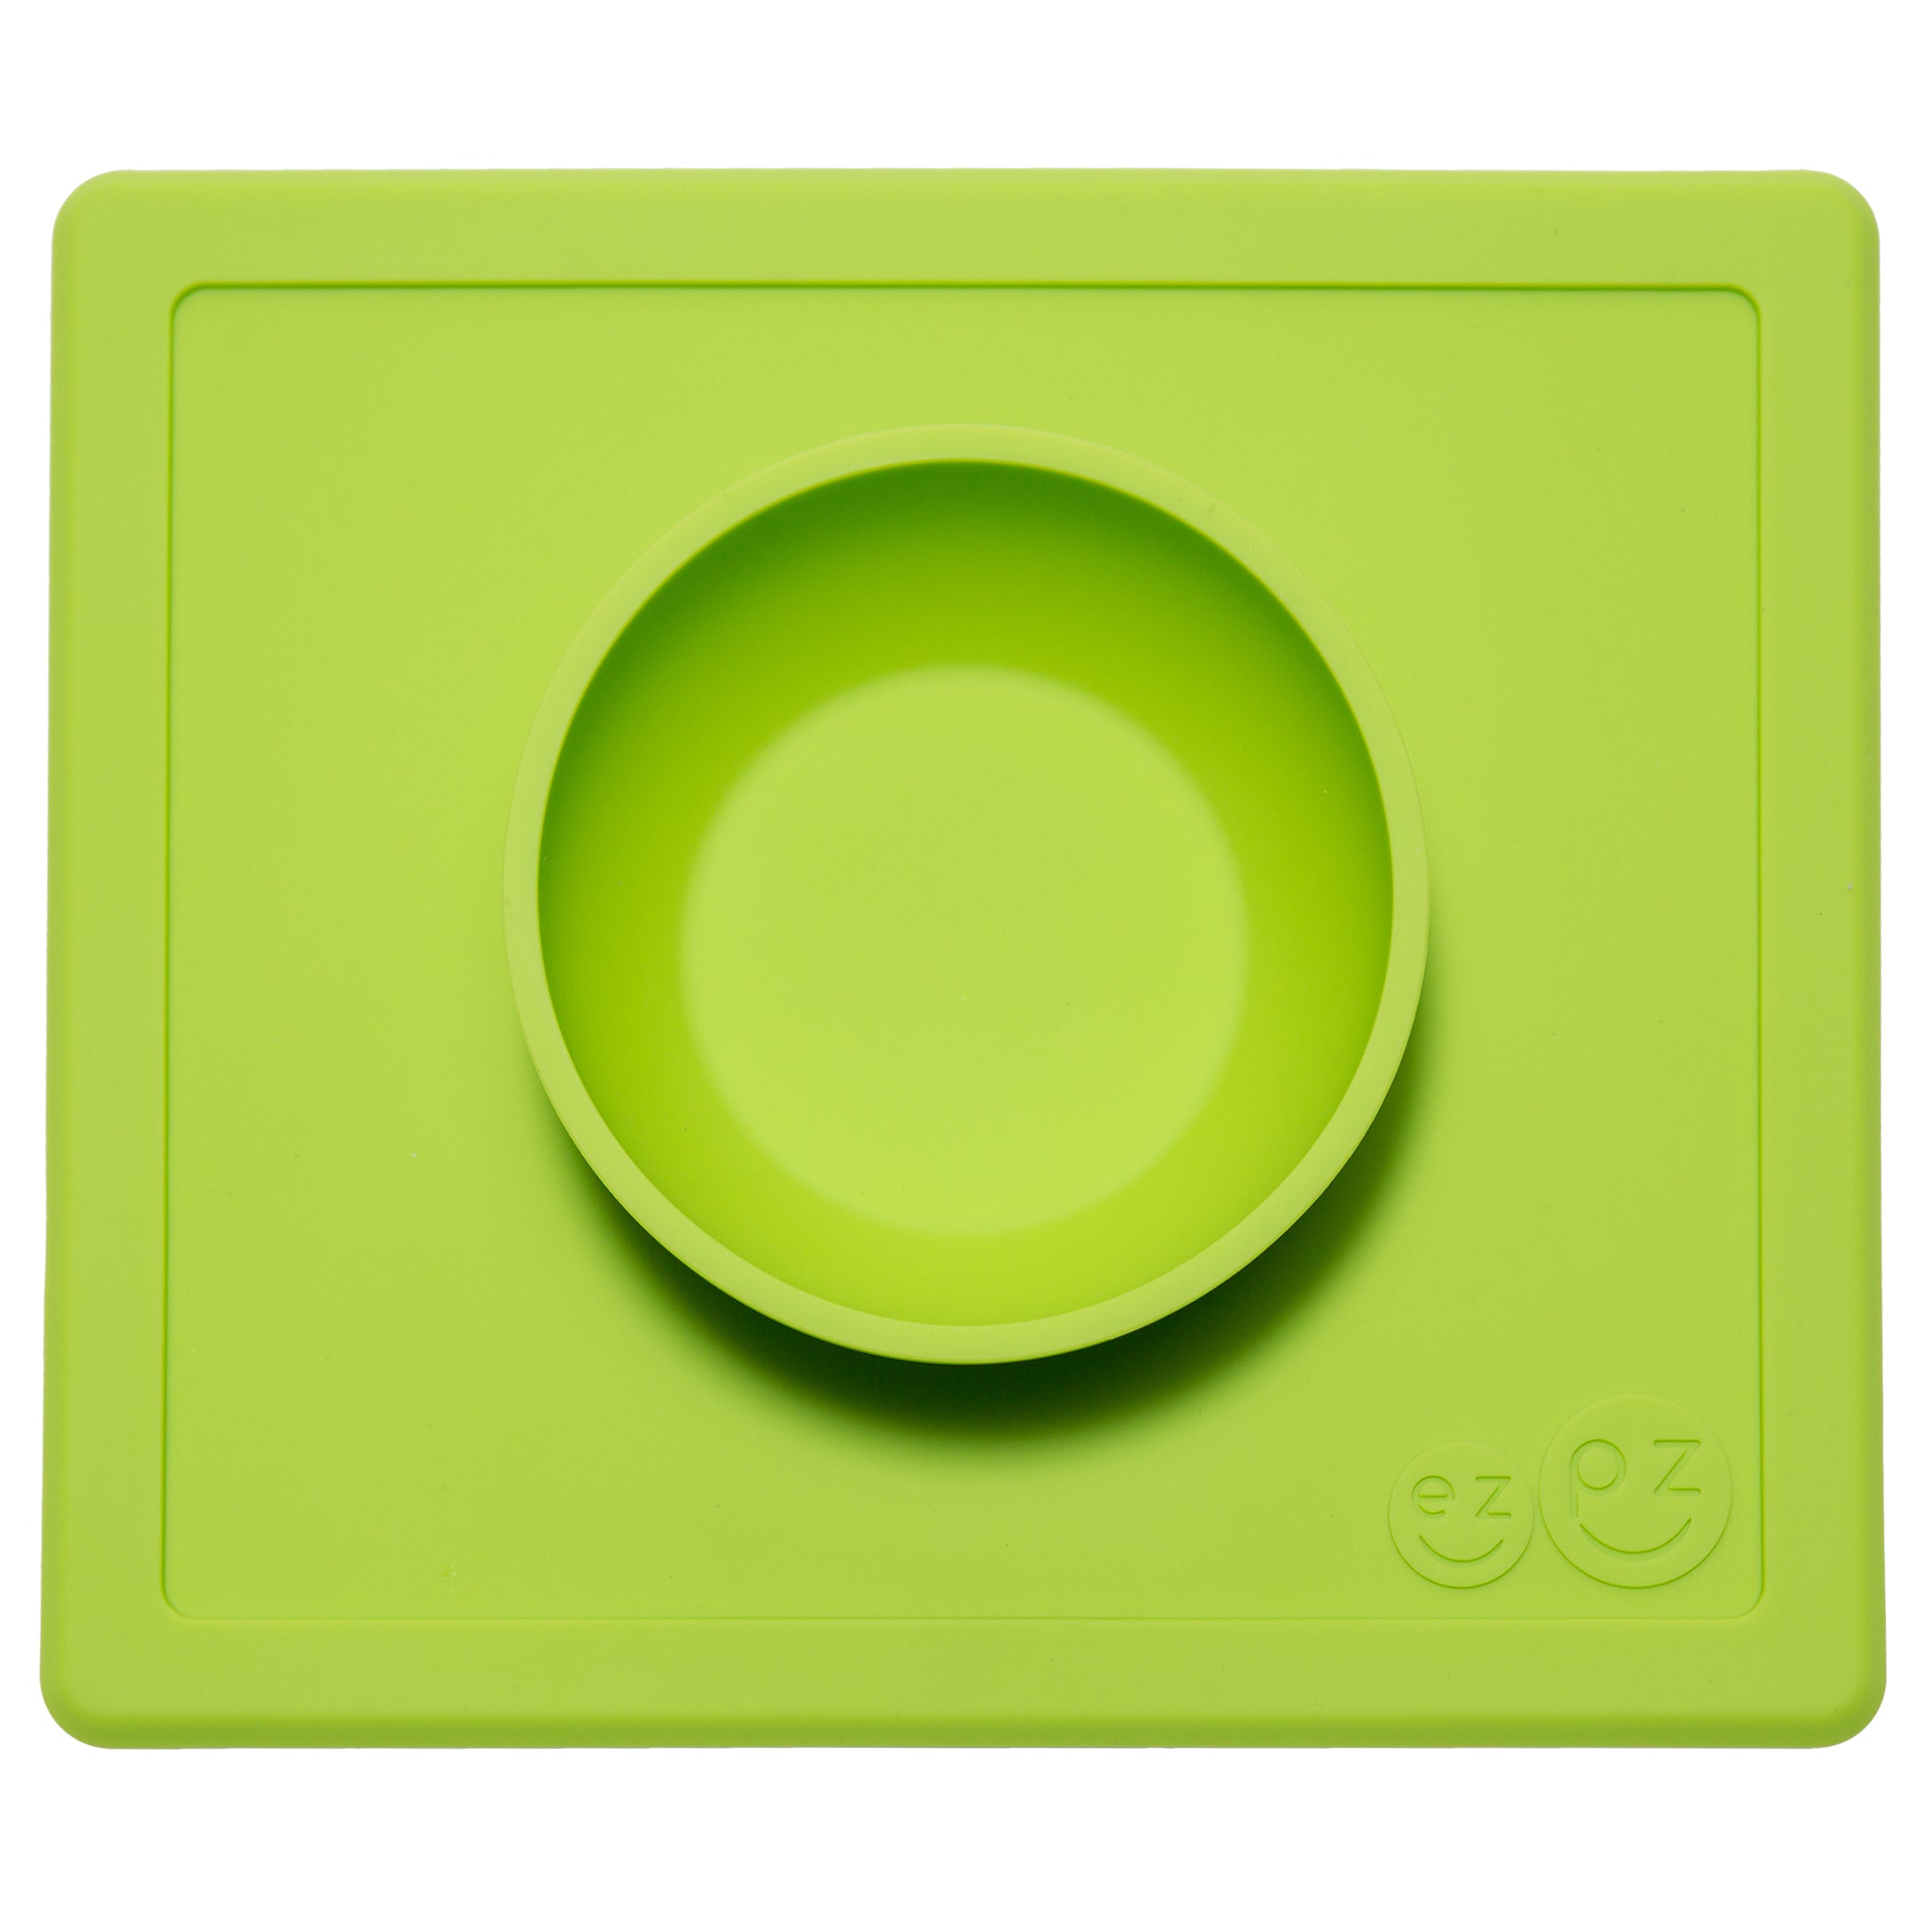 EZPZ Happy Bowl Silikon Schüssel Farbe grün Essmatte